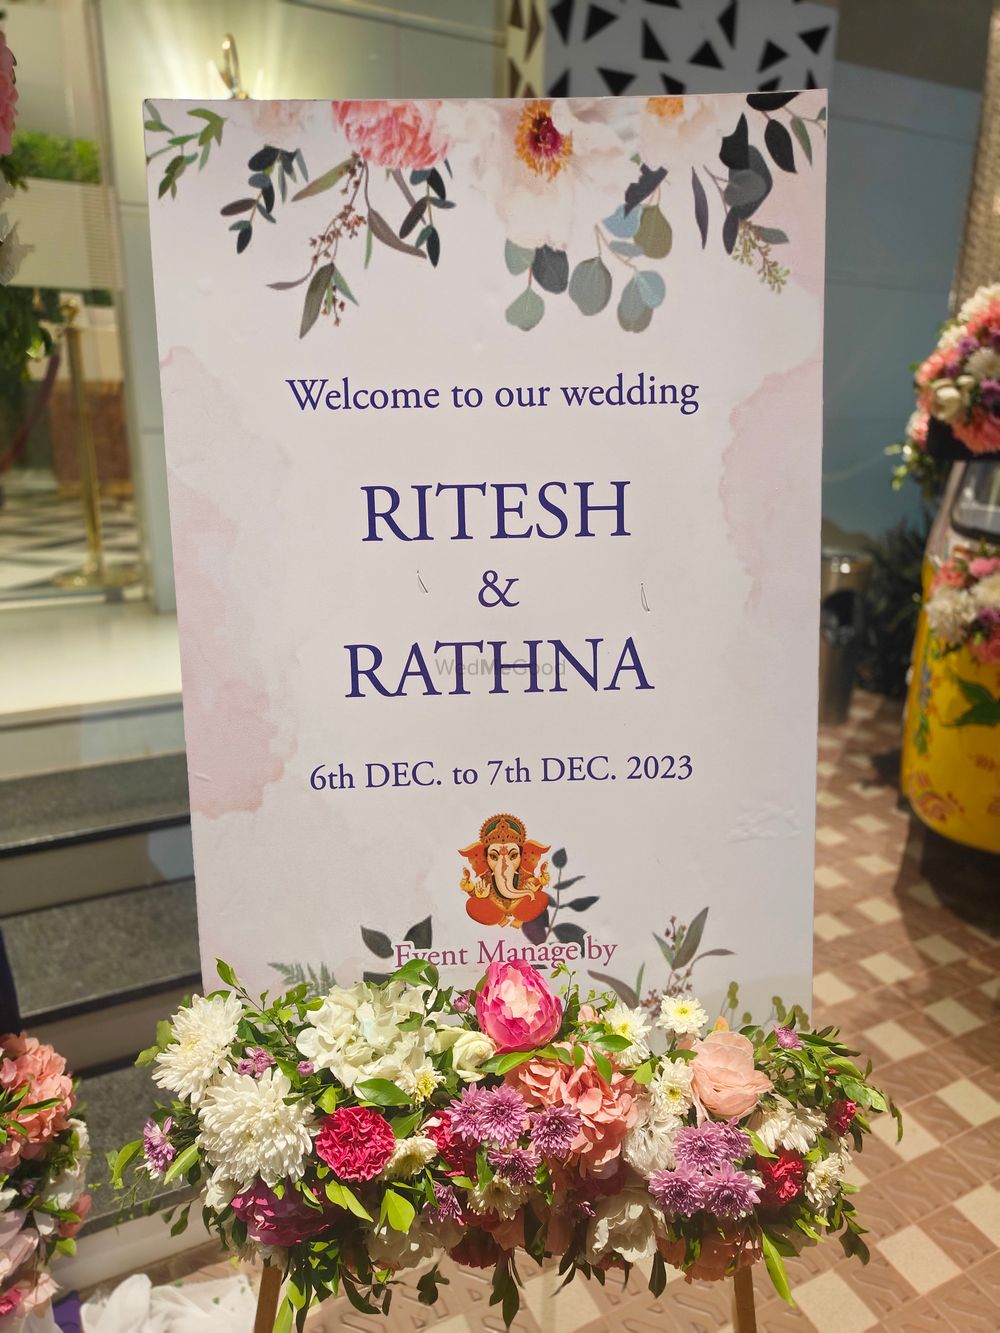 Photo From Ritesh & Rathna's wedding at Goa - By Anchor JJ (Jyoti Jaiswal)